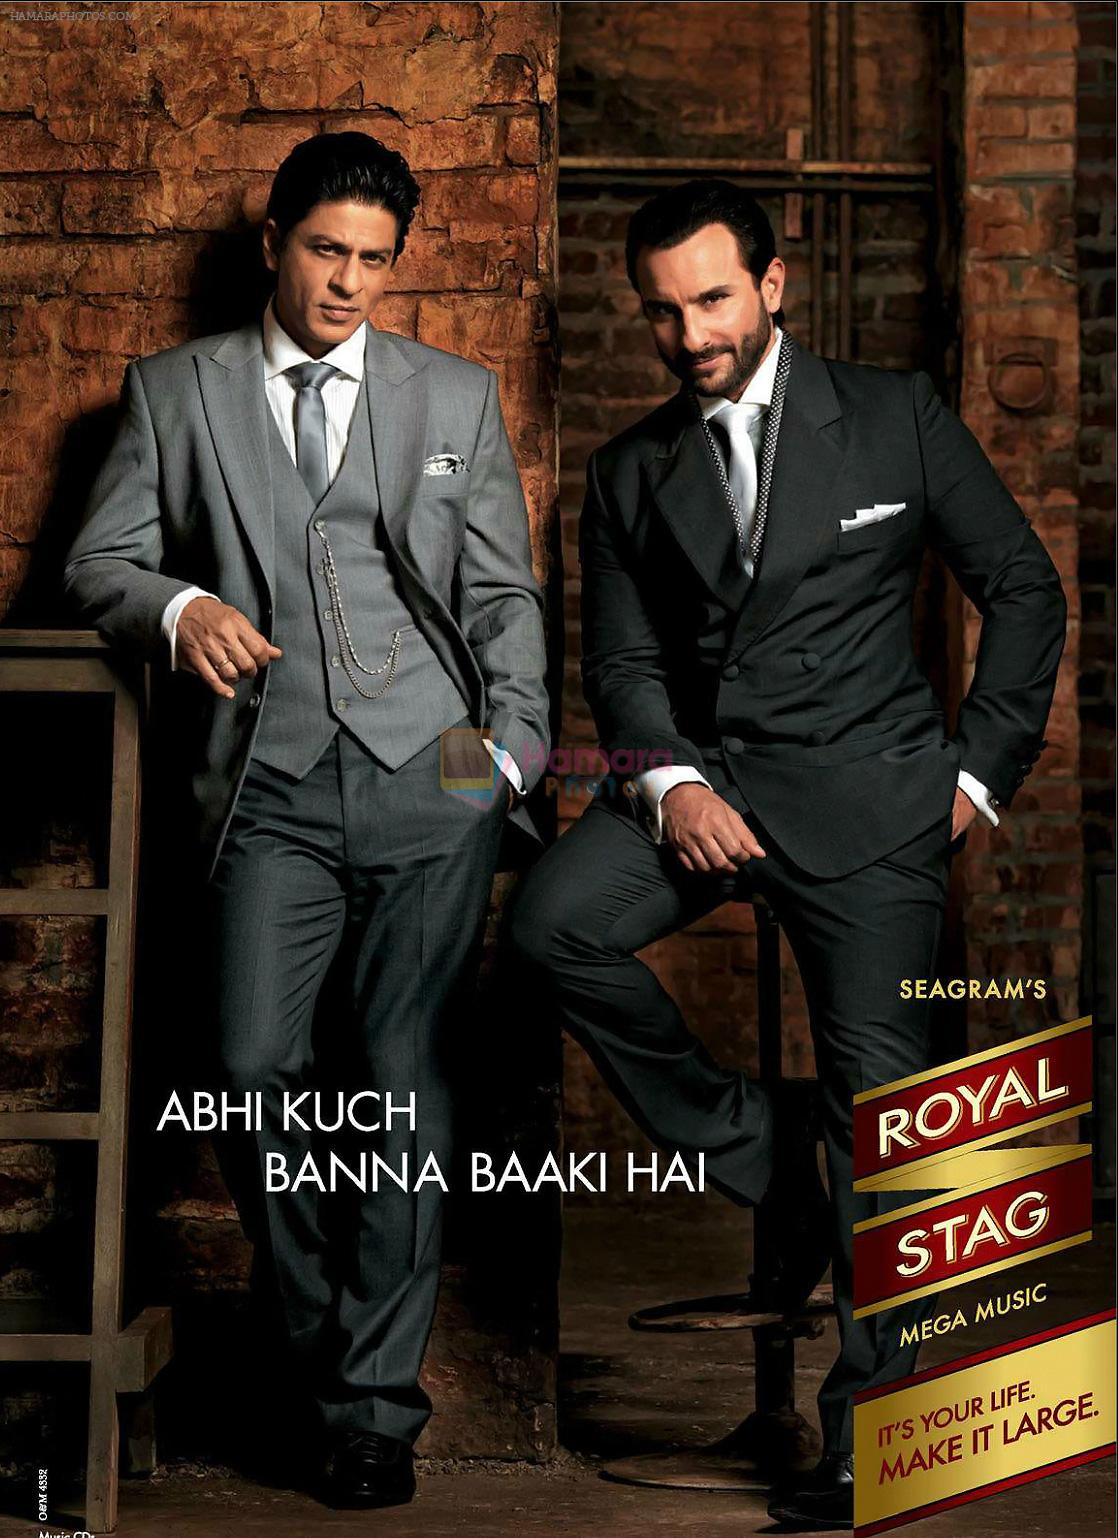 Shahrukh and Saif Ali Khan in Seagram's Royal Stag Ad